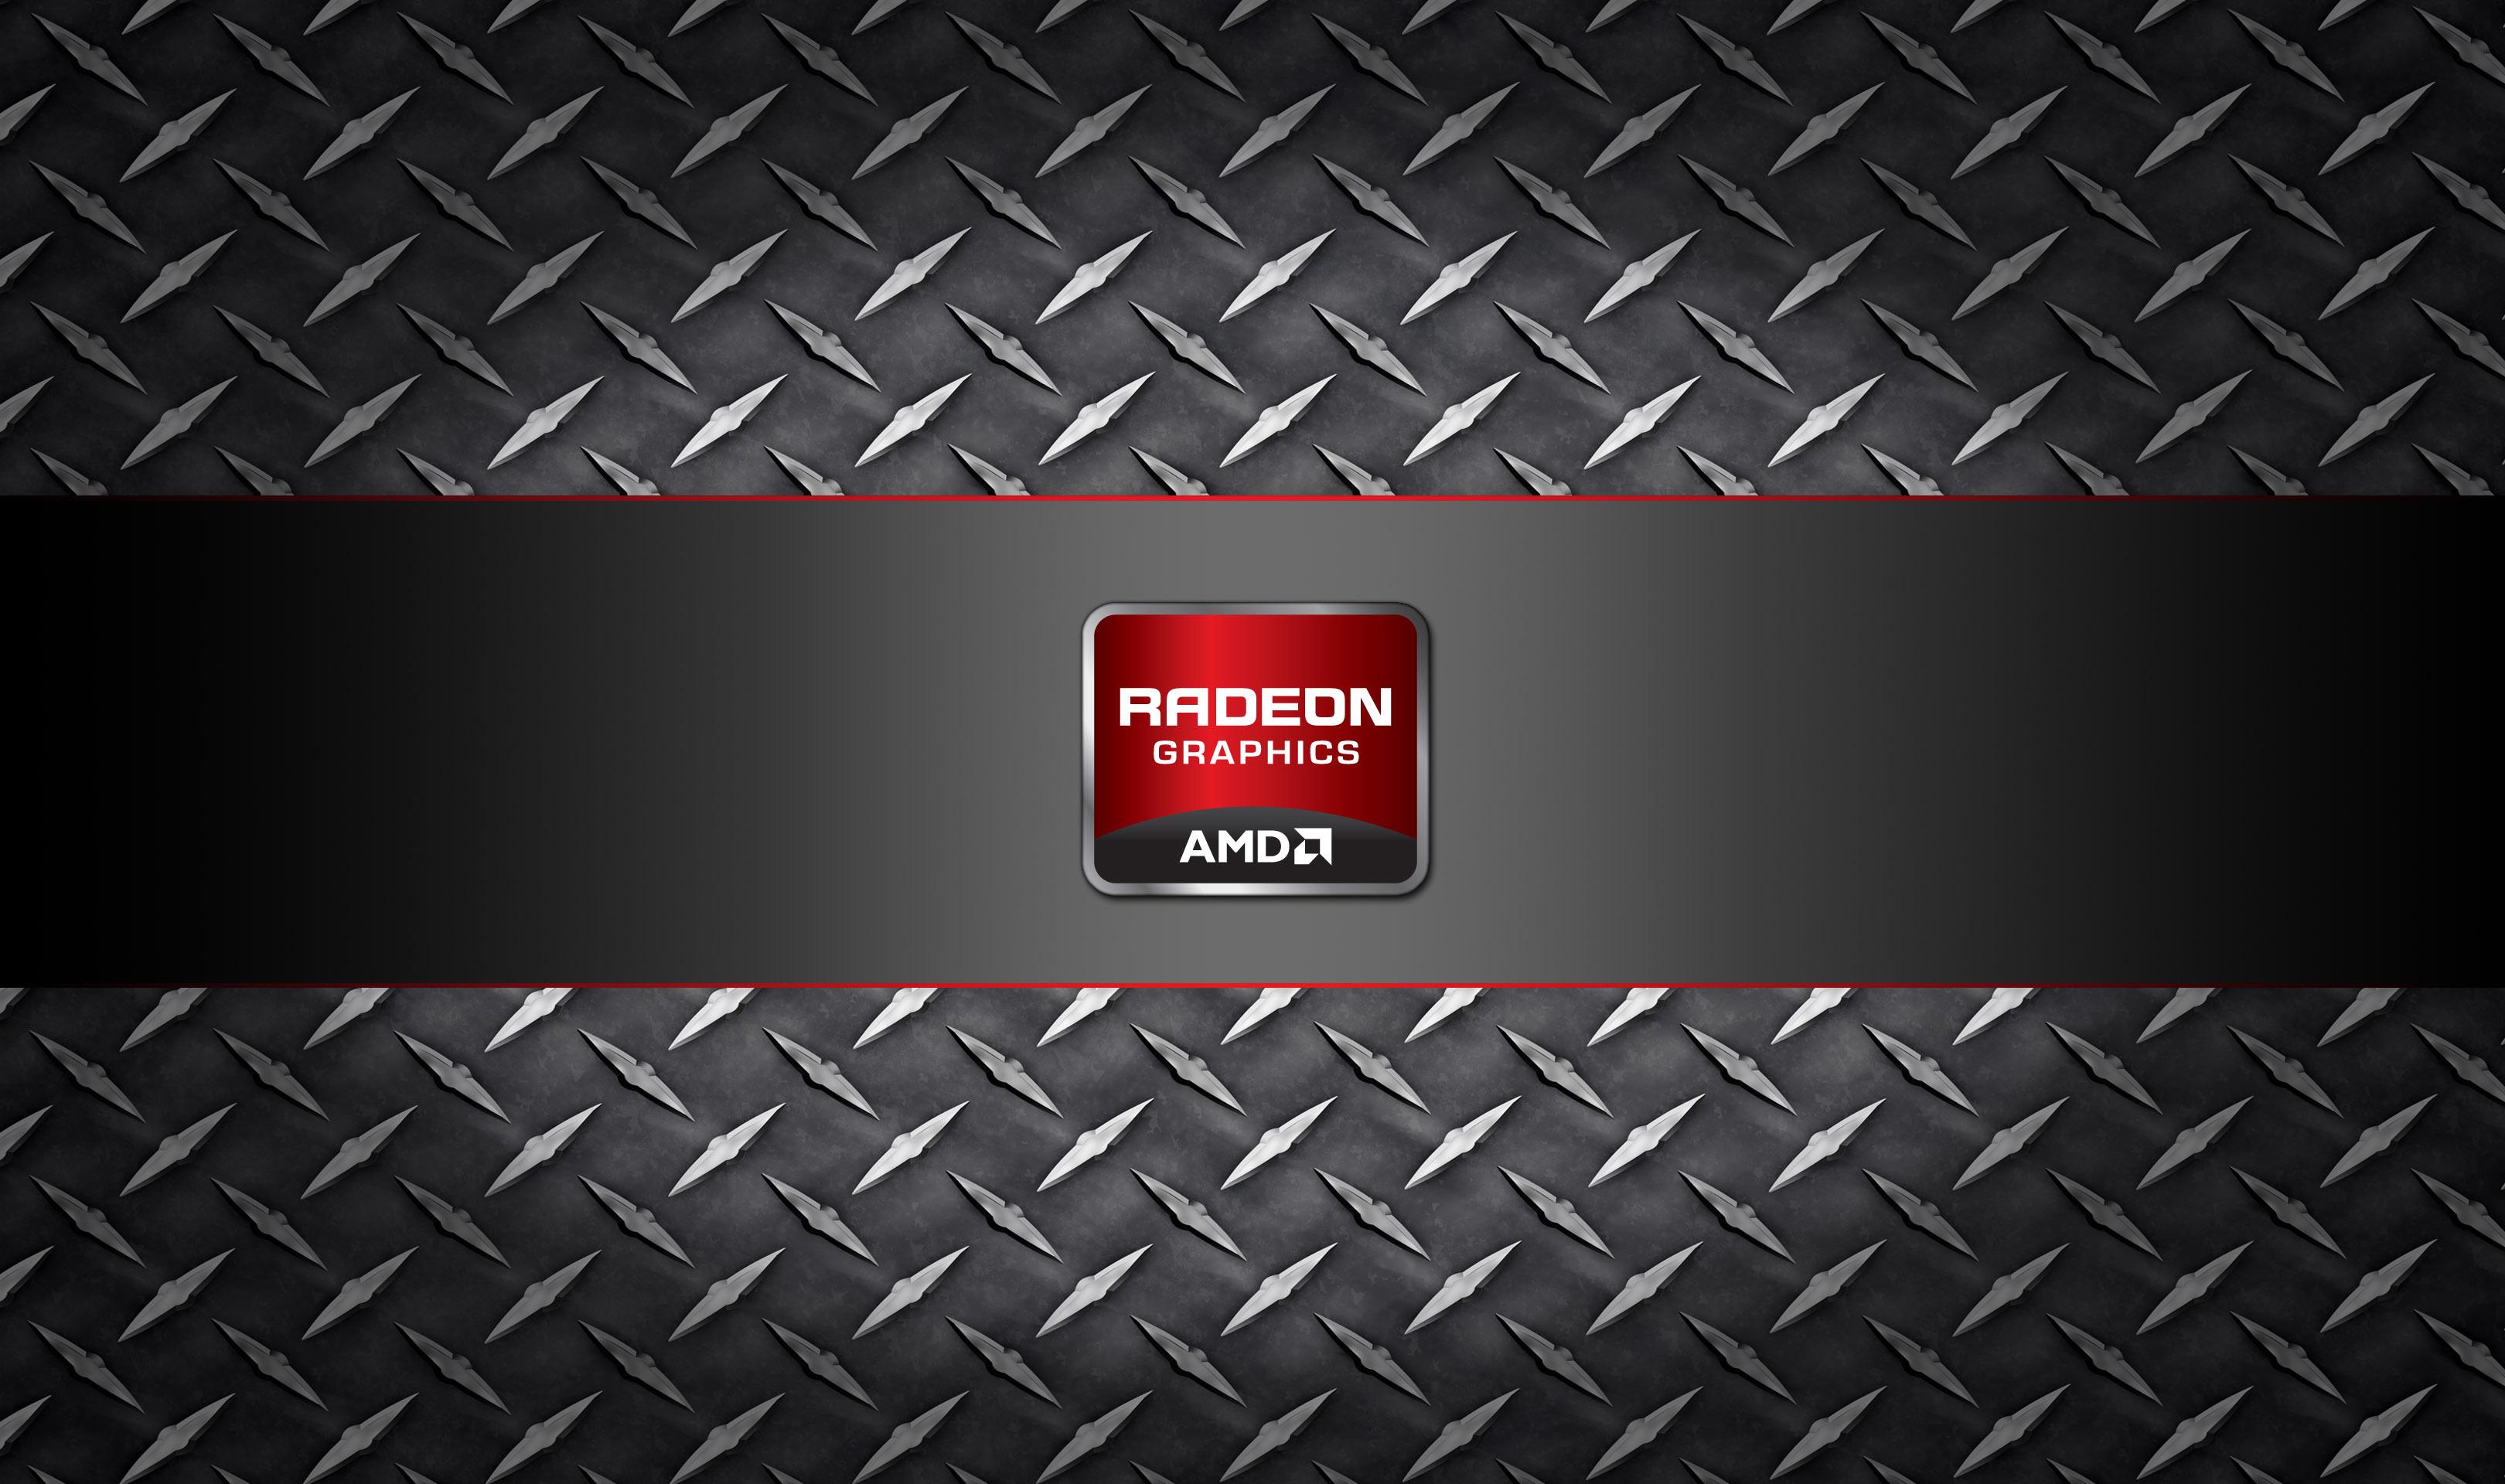 Free Download Amd Radeon Wallpaper 19x1080 Just Made An Amd Radeon 3240x19 For Your Desktop Mobile Tablet Explore 35 Amd Radeon Hd Wallpaper Amd Radeon Hd Wallpaper Amd Radeon